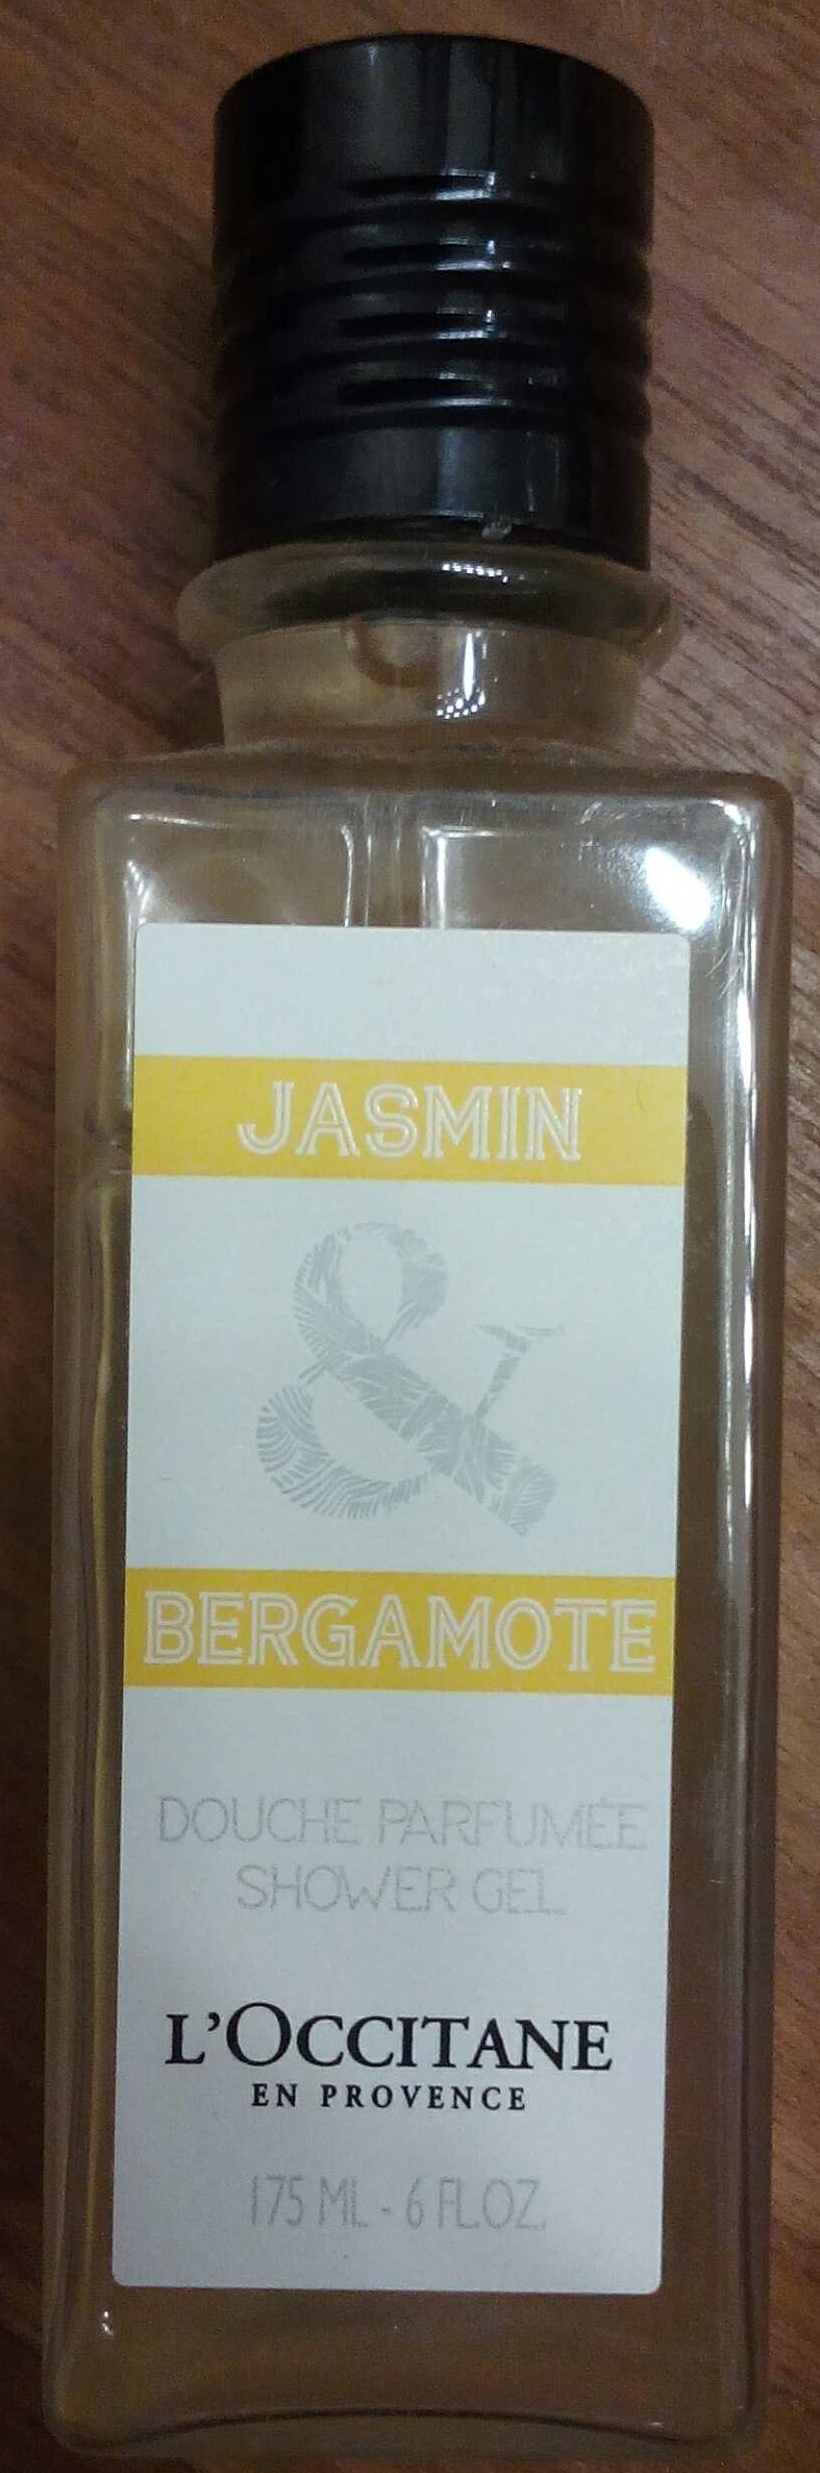 Jasmin & bergamote - douche parfumée - Product - fr